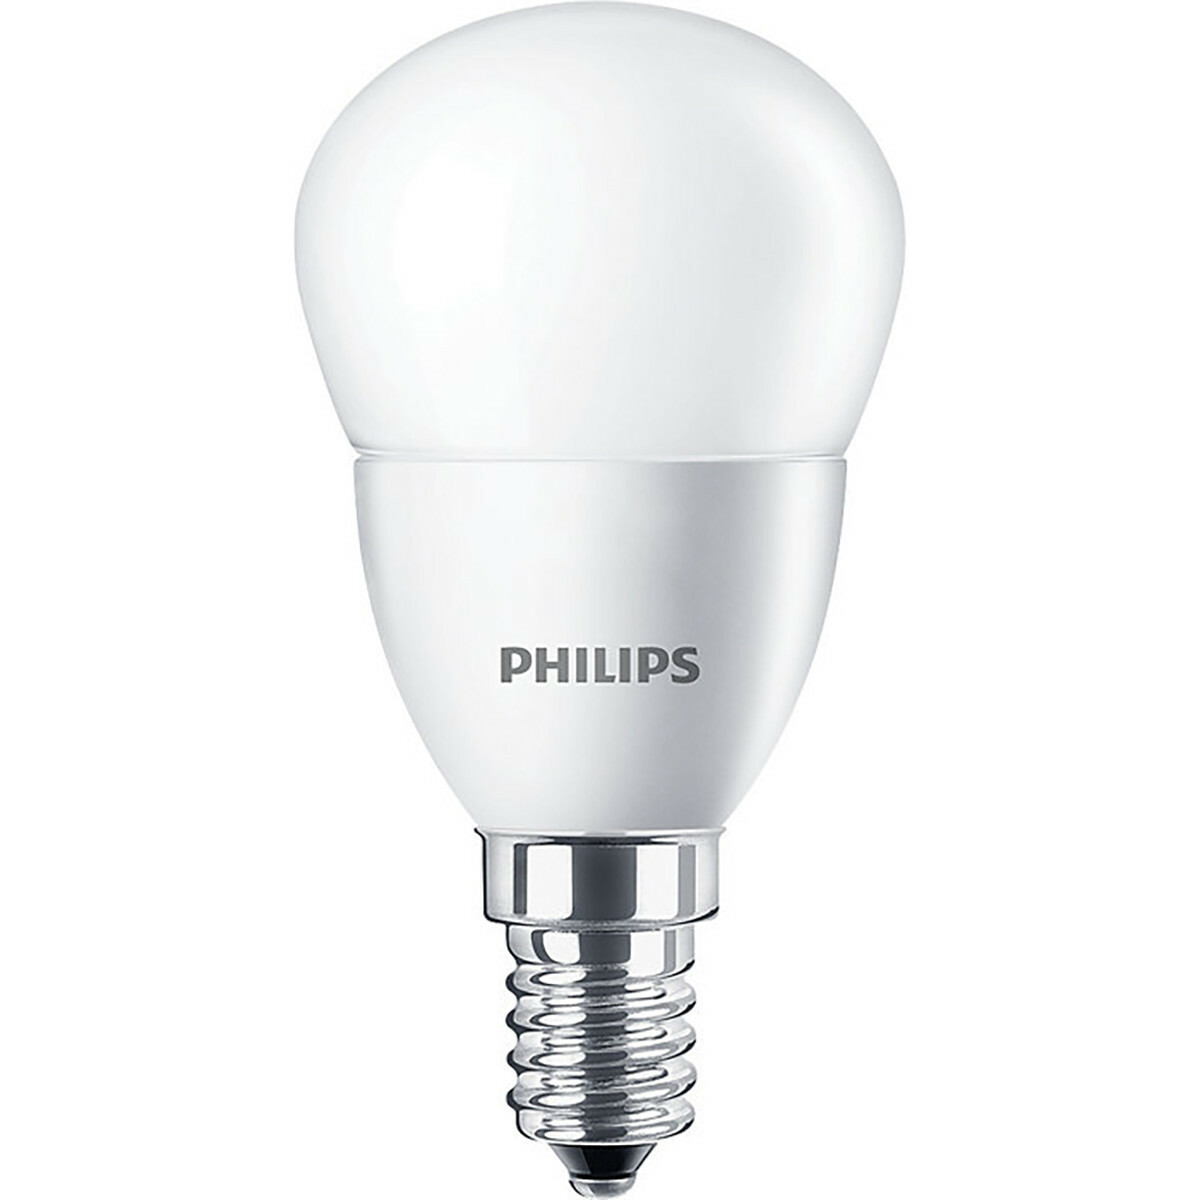 verzonden leren rijk PHILIPS - LED Lamp - CorePro Lustre 827 P45 FR - E14 Fitting - 5.5W - Warm  Wit 2700K | Vervangt 40W | BES LED